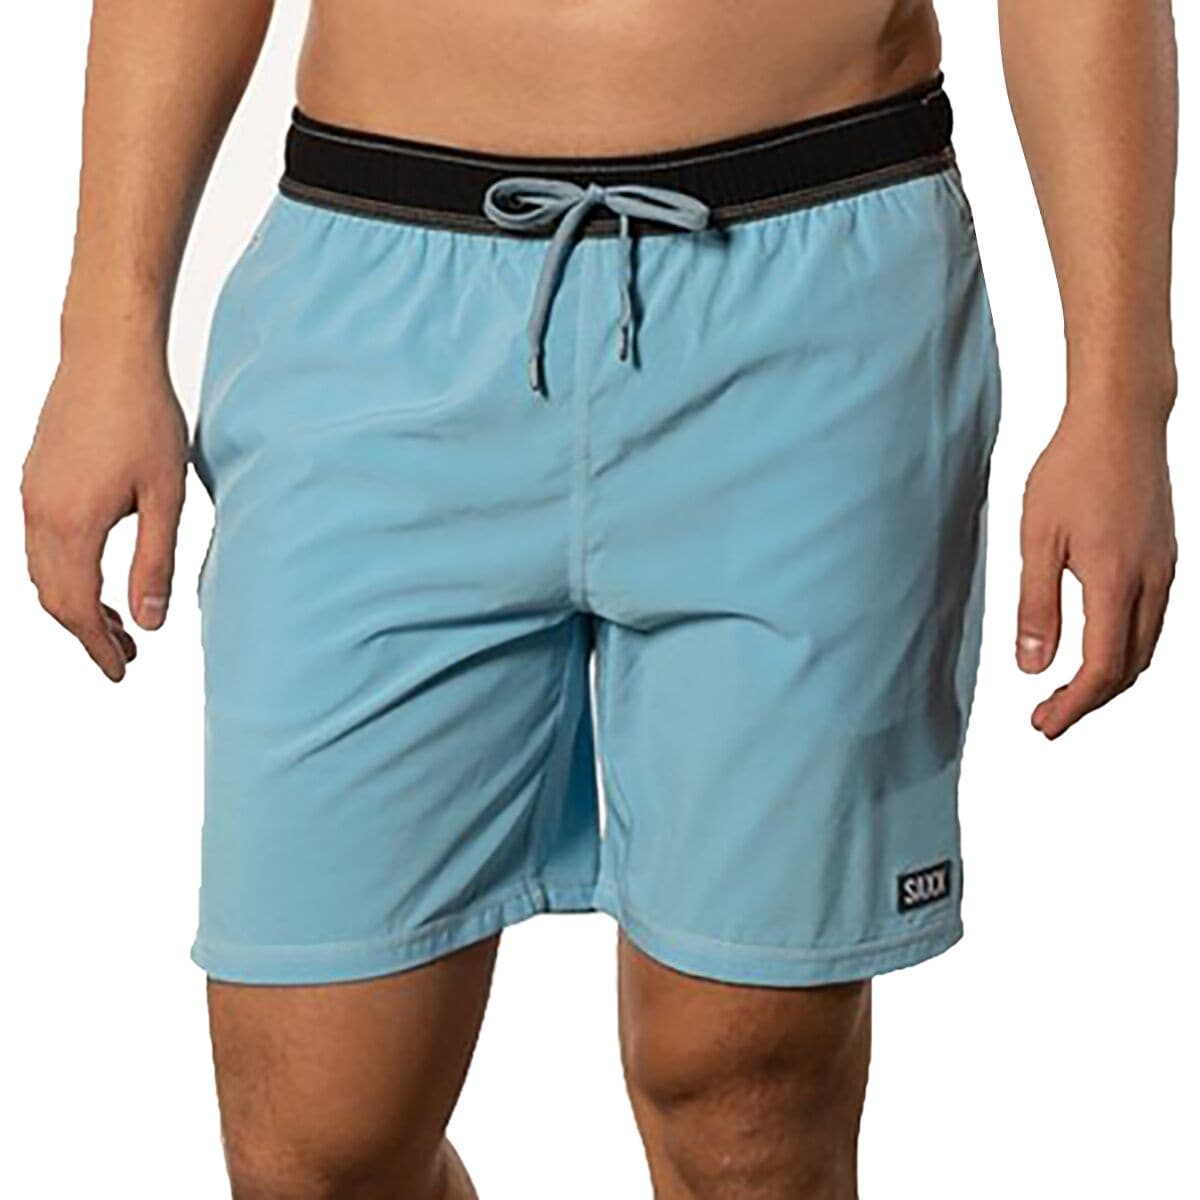 SAXX Oh Buoy 2-in-1 7in Swim Short - Men's - Clothing